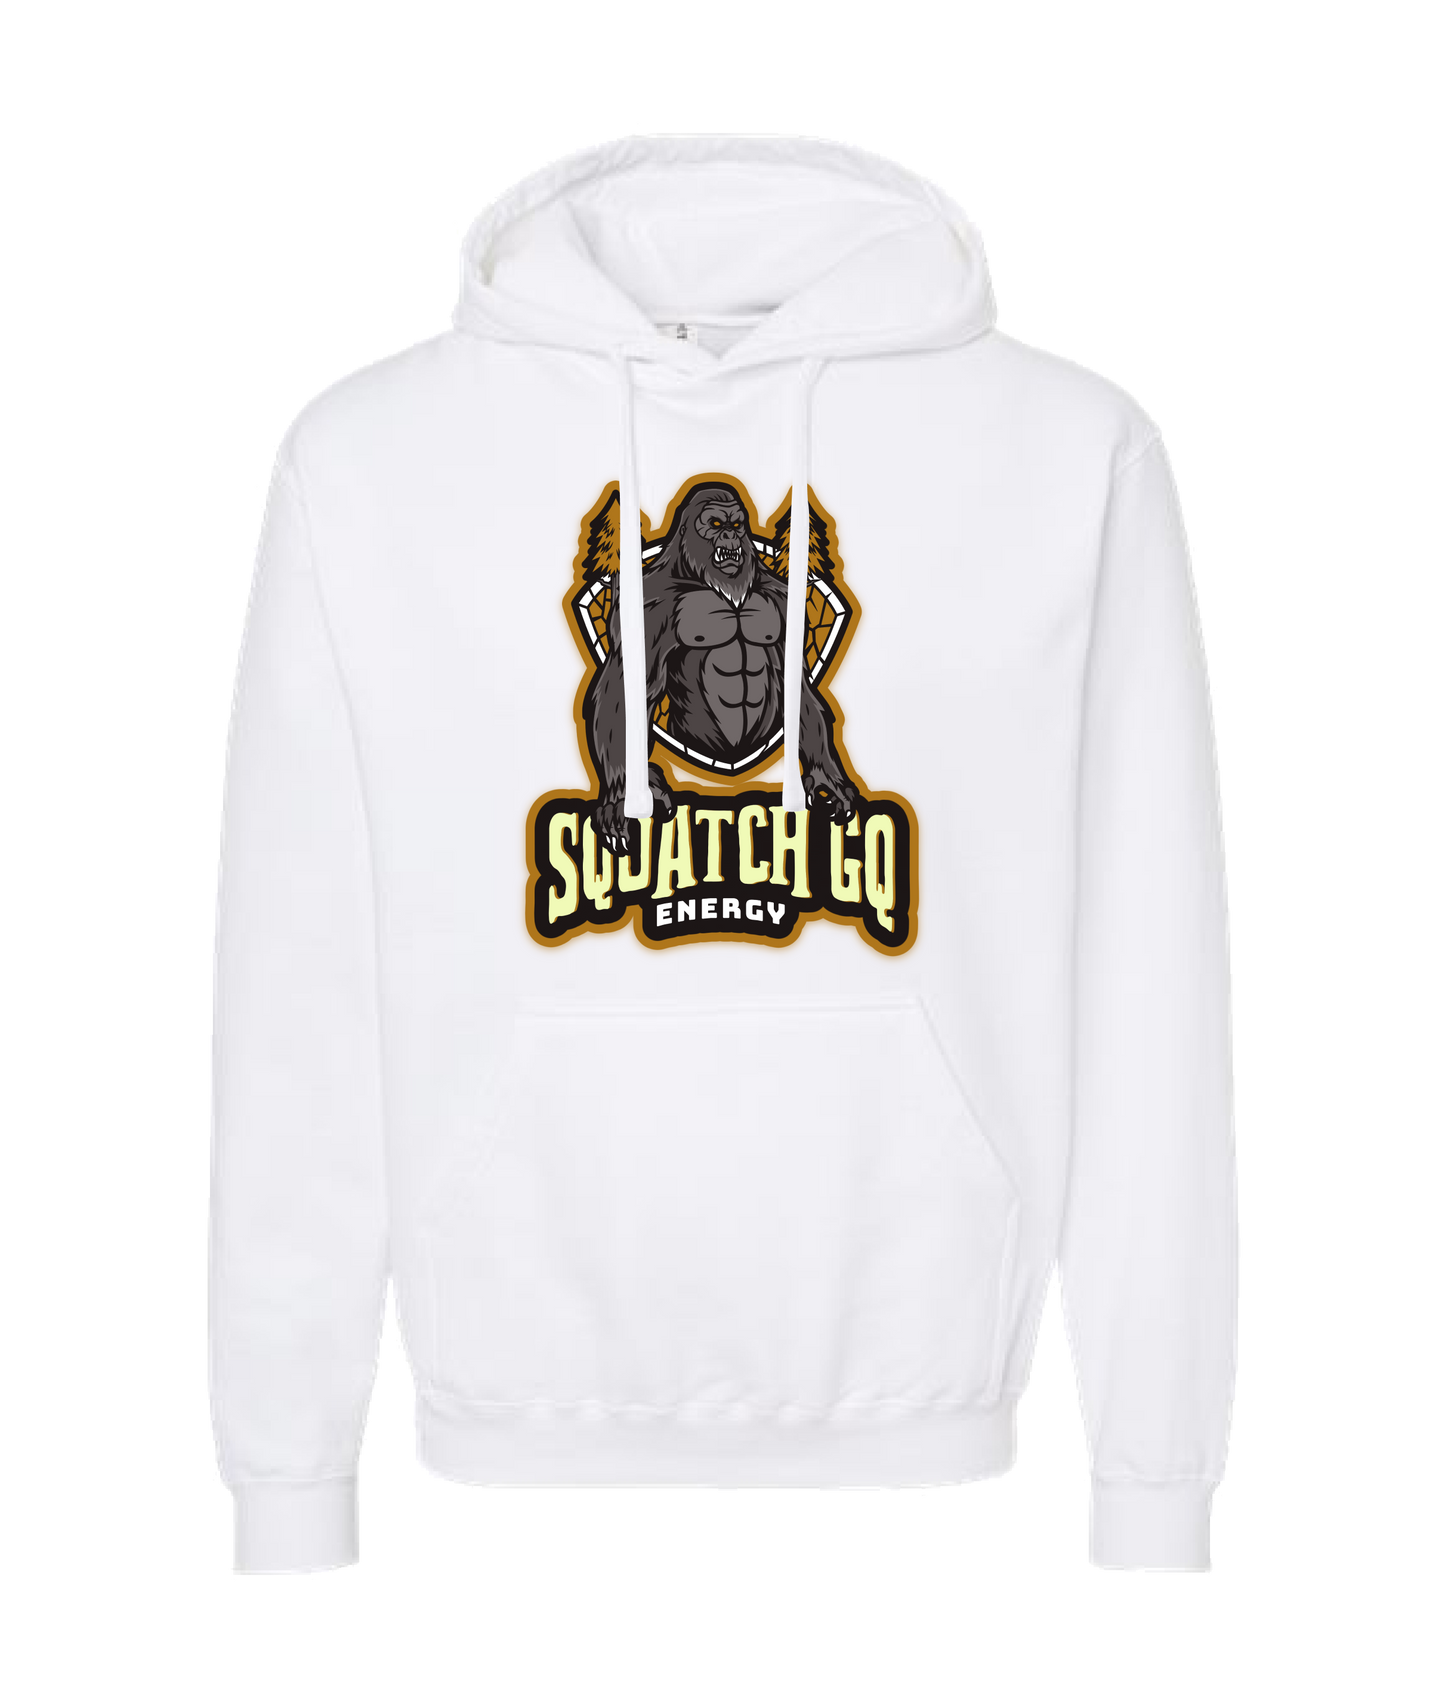 Squatch GQ Energy - Squatch Energy - White Hoodie